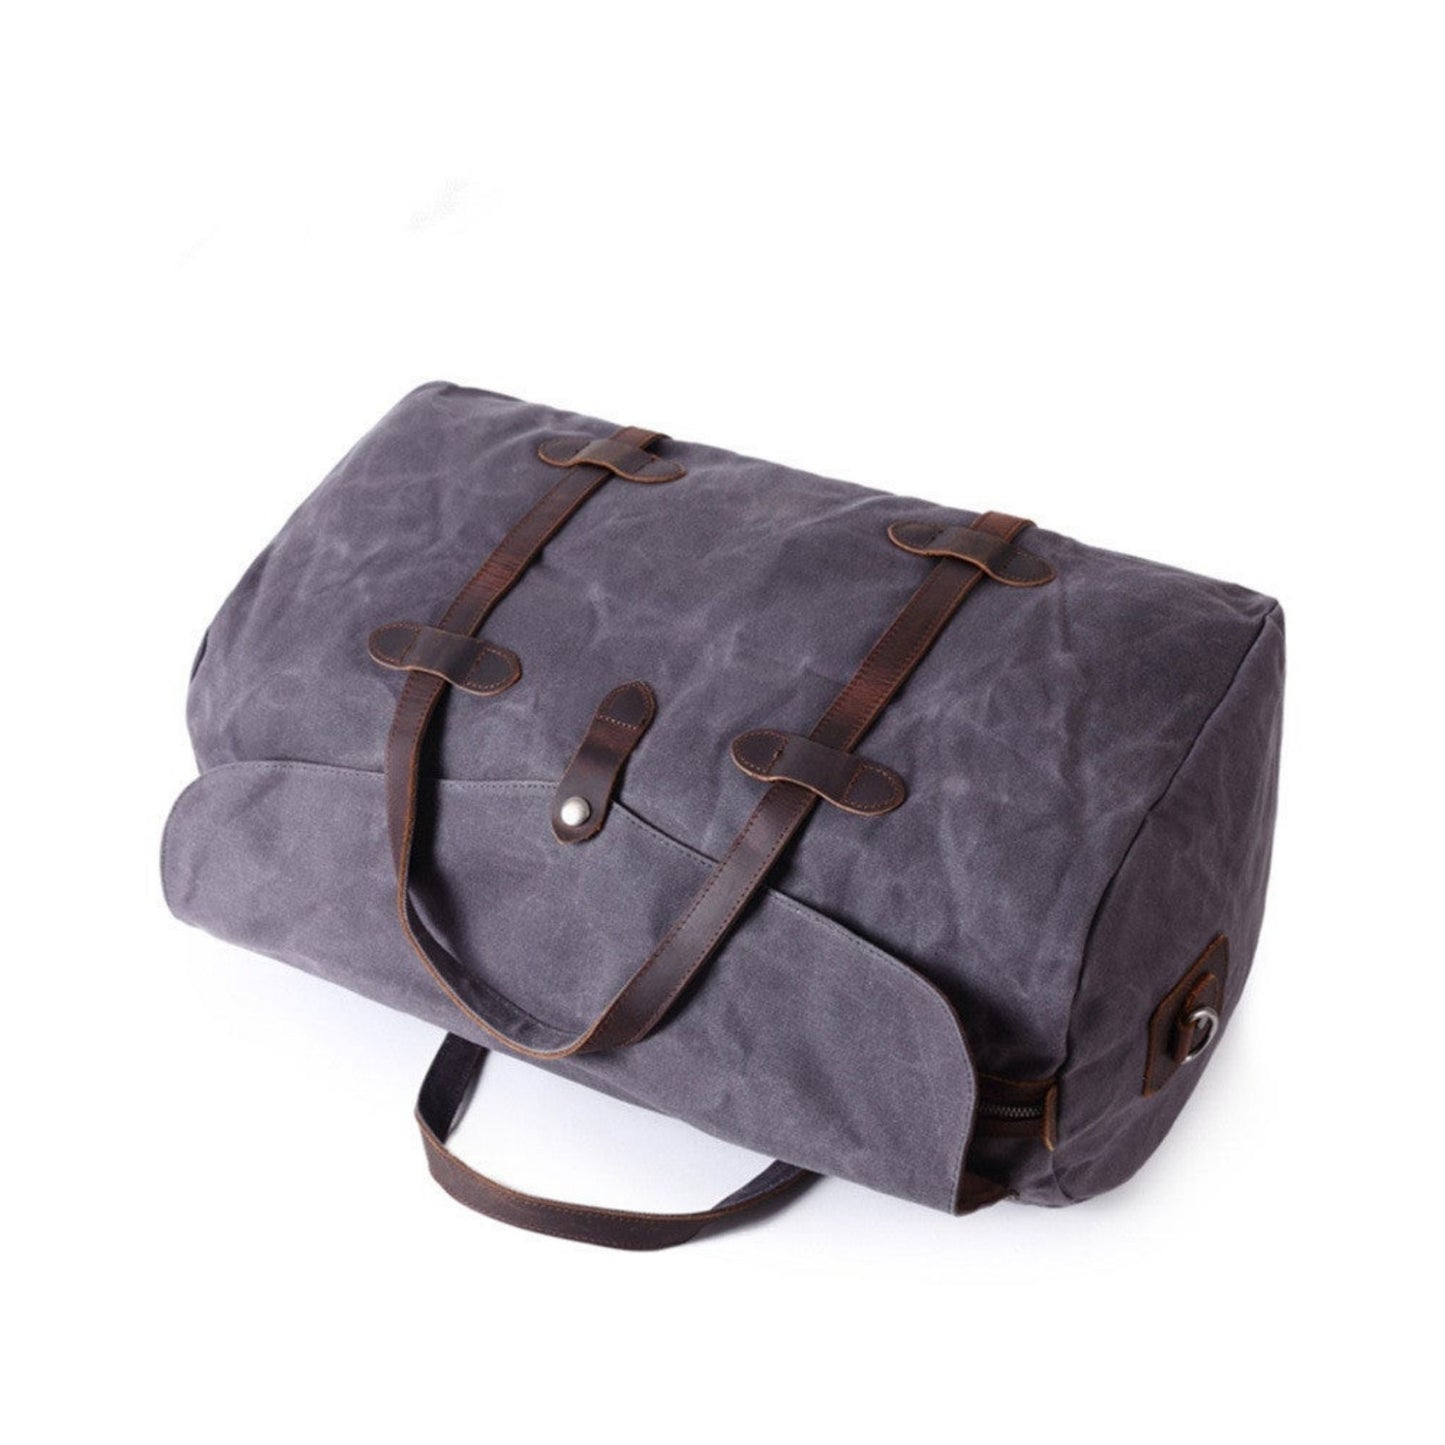 Waxed Canvas Duffle Travel Bag - Blue Sebe Handmade Leather Bags